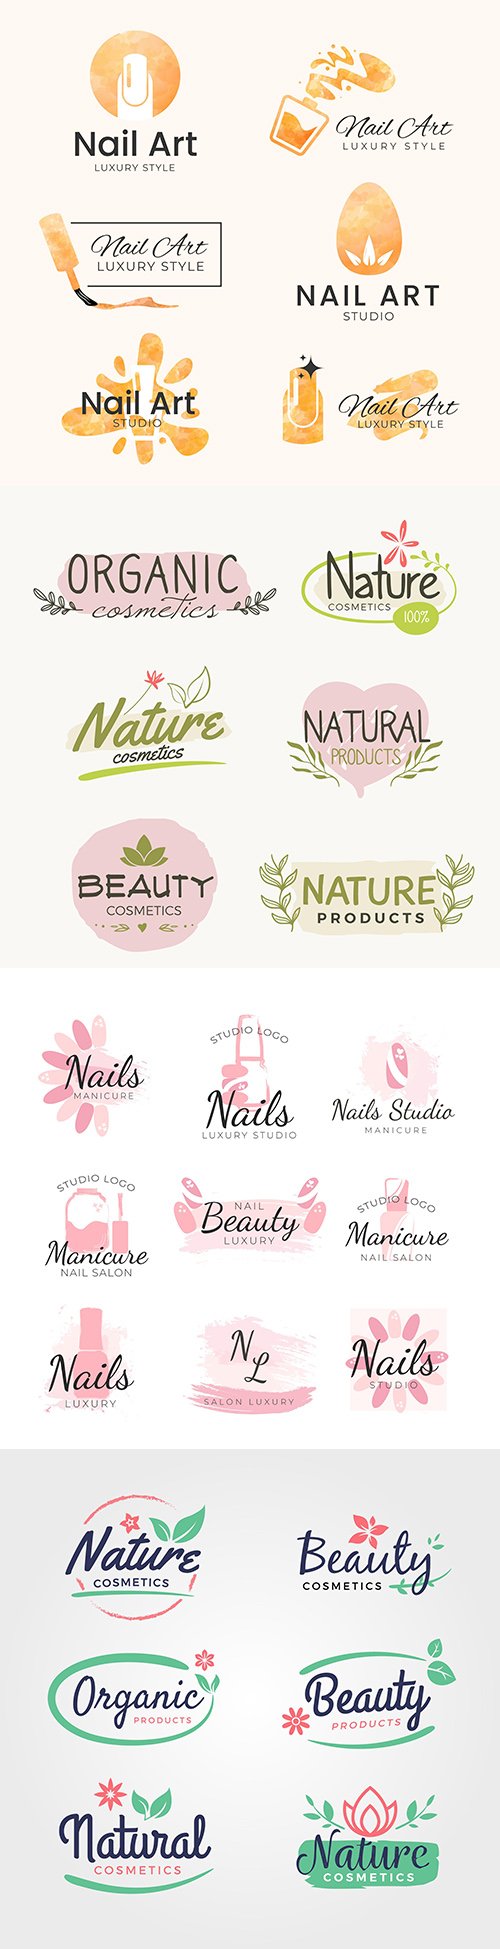 Brand name company logos business corporate design 33